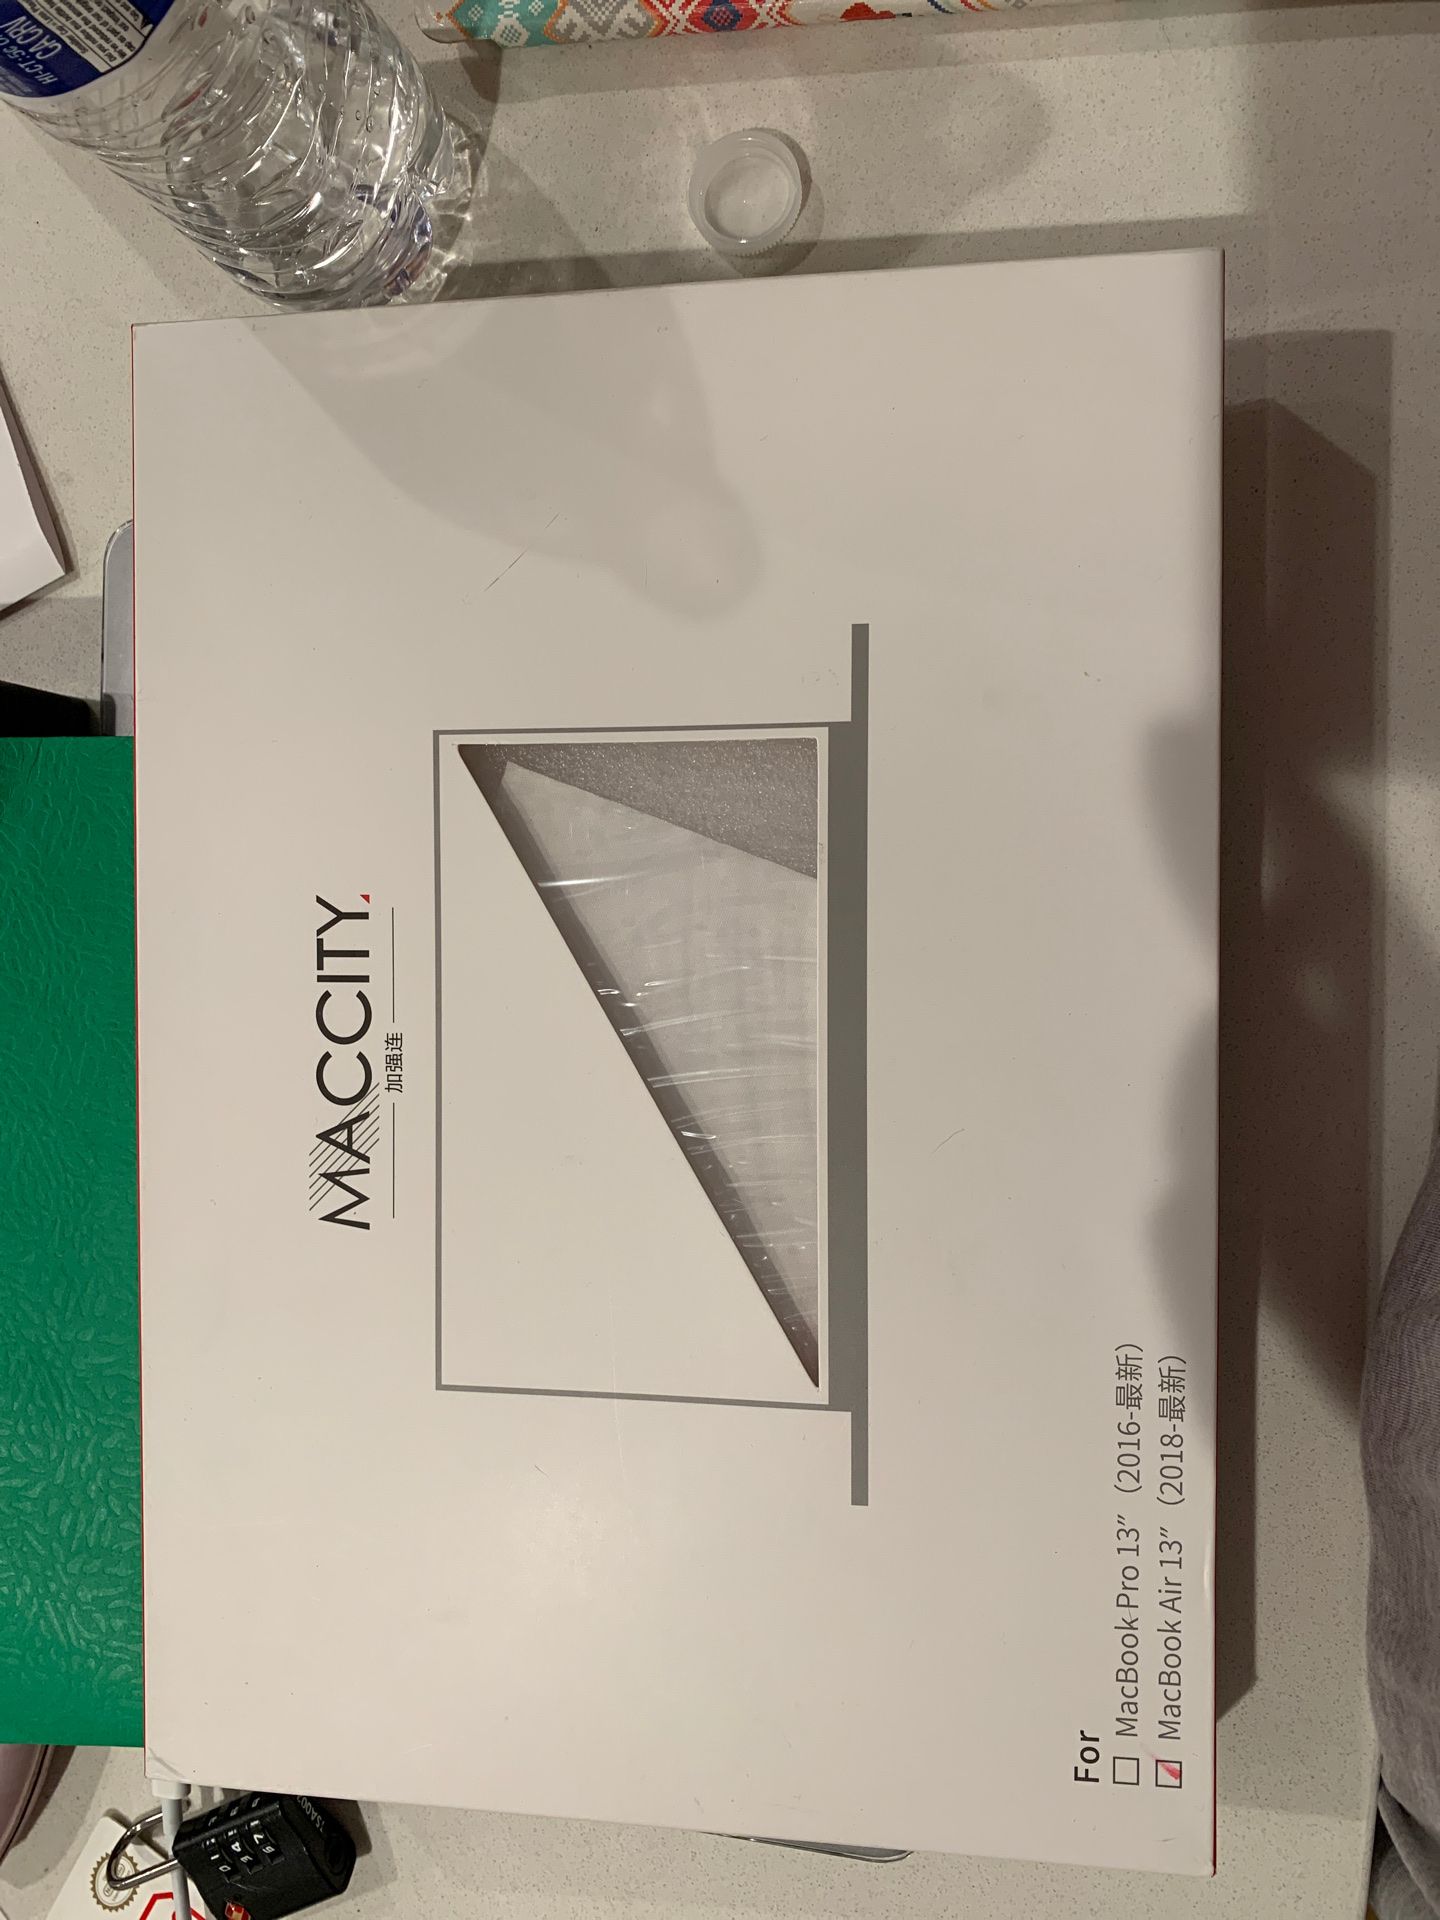 MacBook Air transparent case for MacBook Air 13” 2018 version